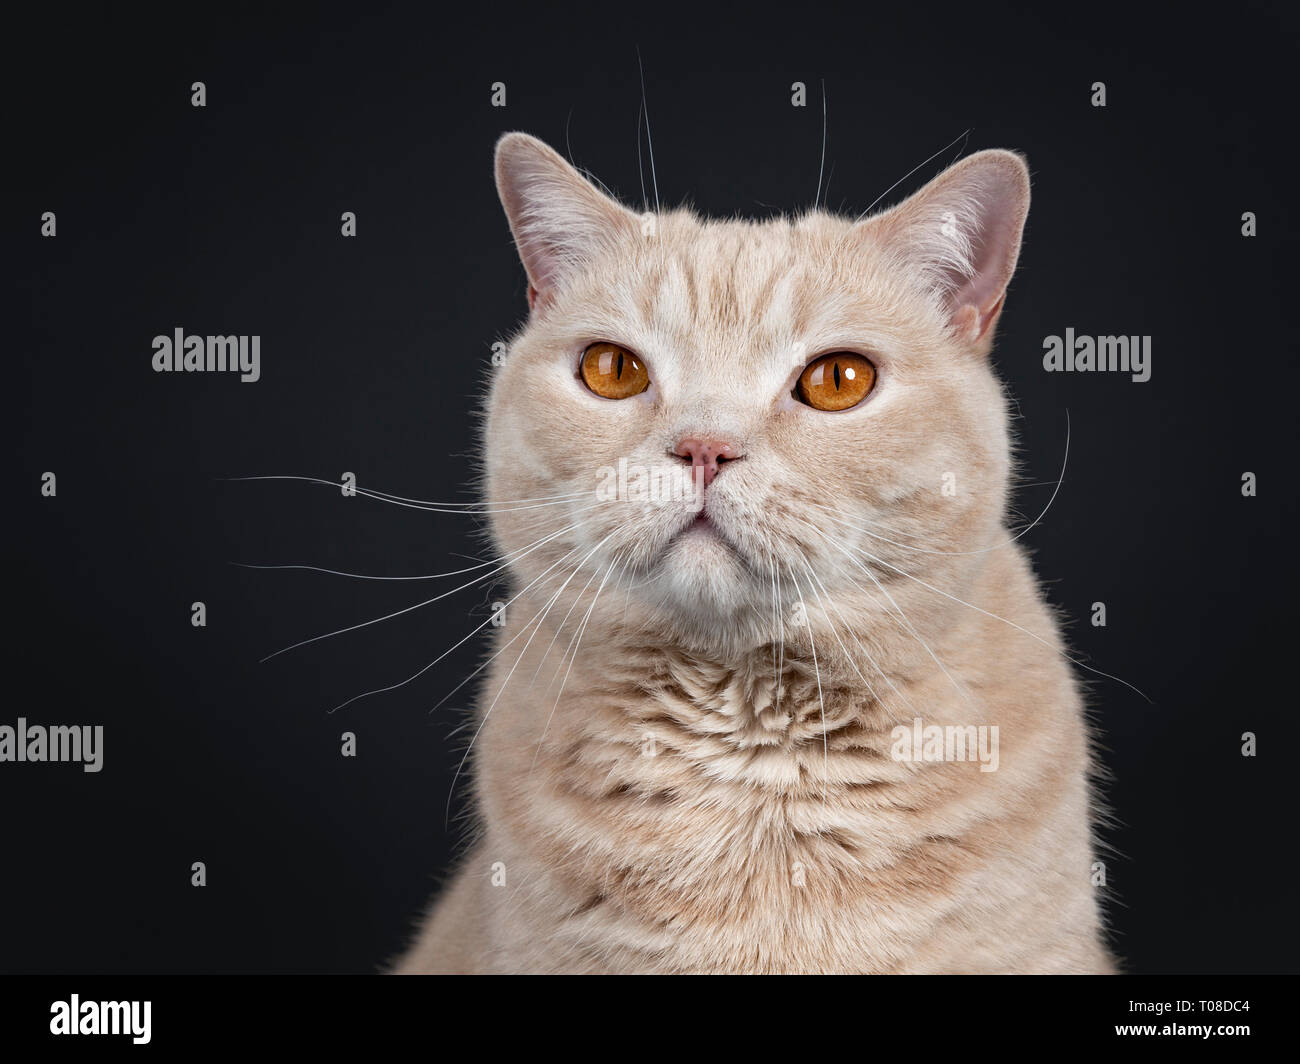 Head Shot Of Big Adult Cream British Shorthair Cat Looking At